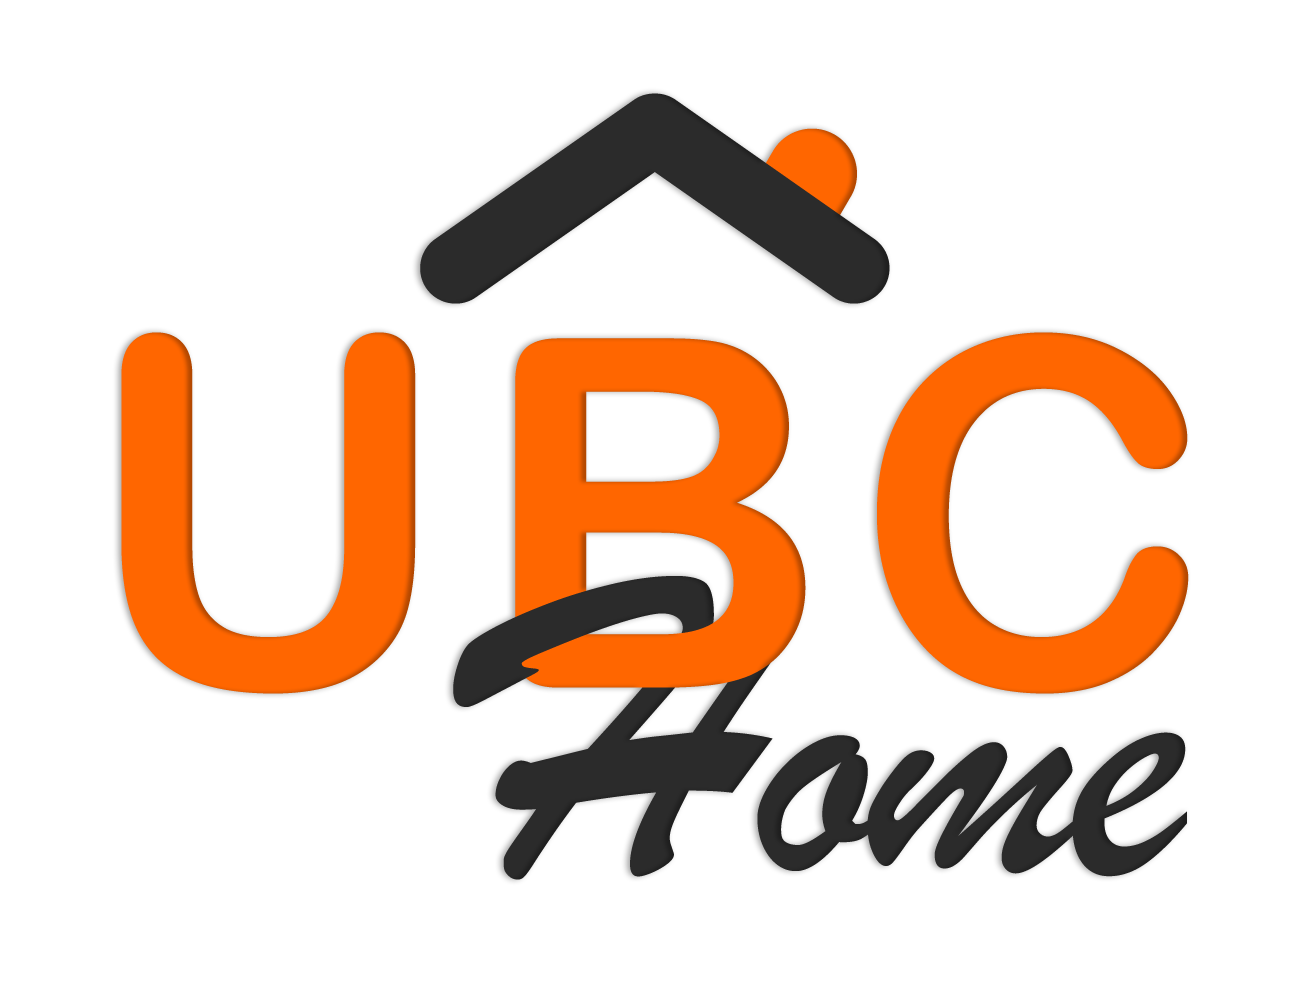 UBC Home - للأثاث والمفروشات والاكسسوارات